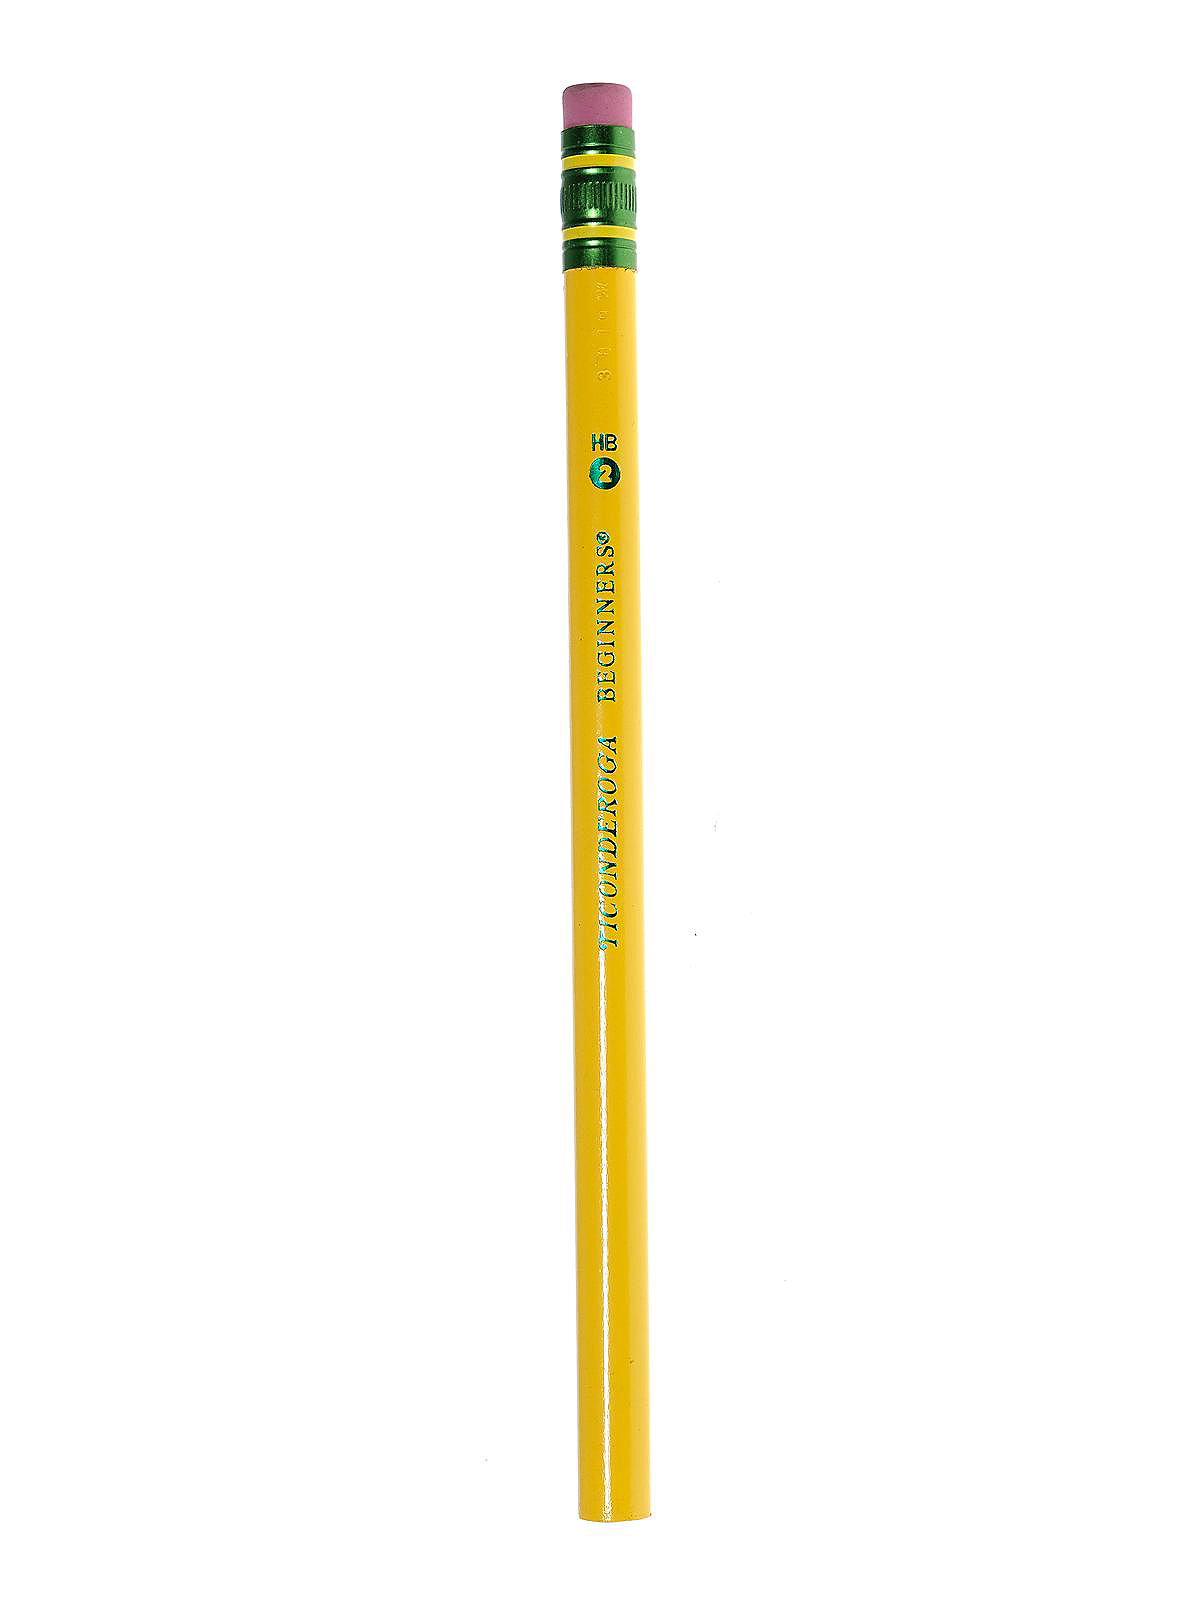 Dixon Ticonderoga Beginner's Pencil - Box of 12